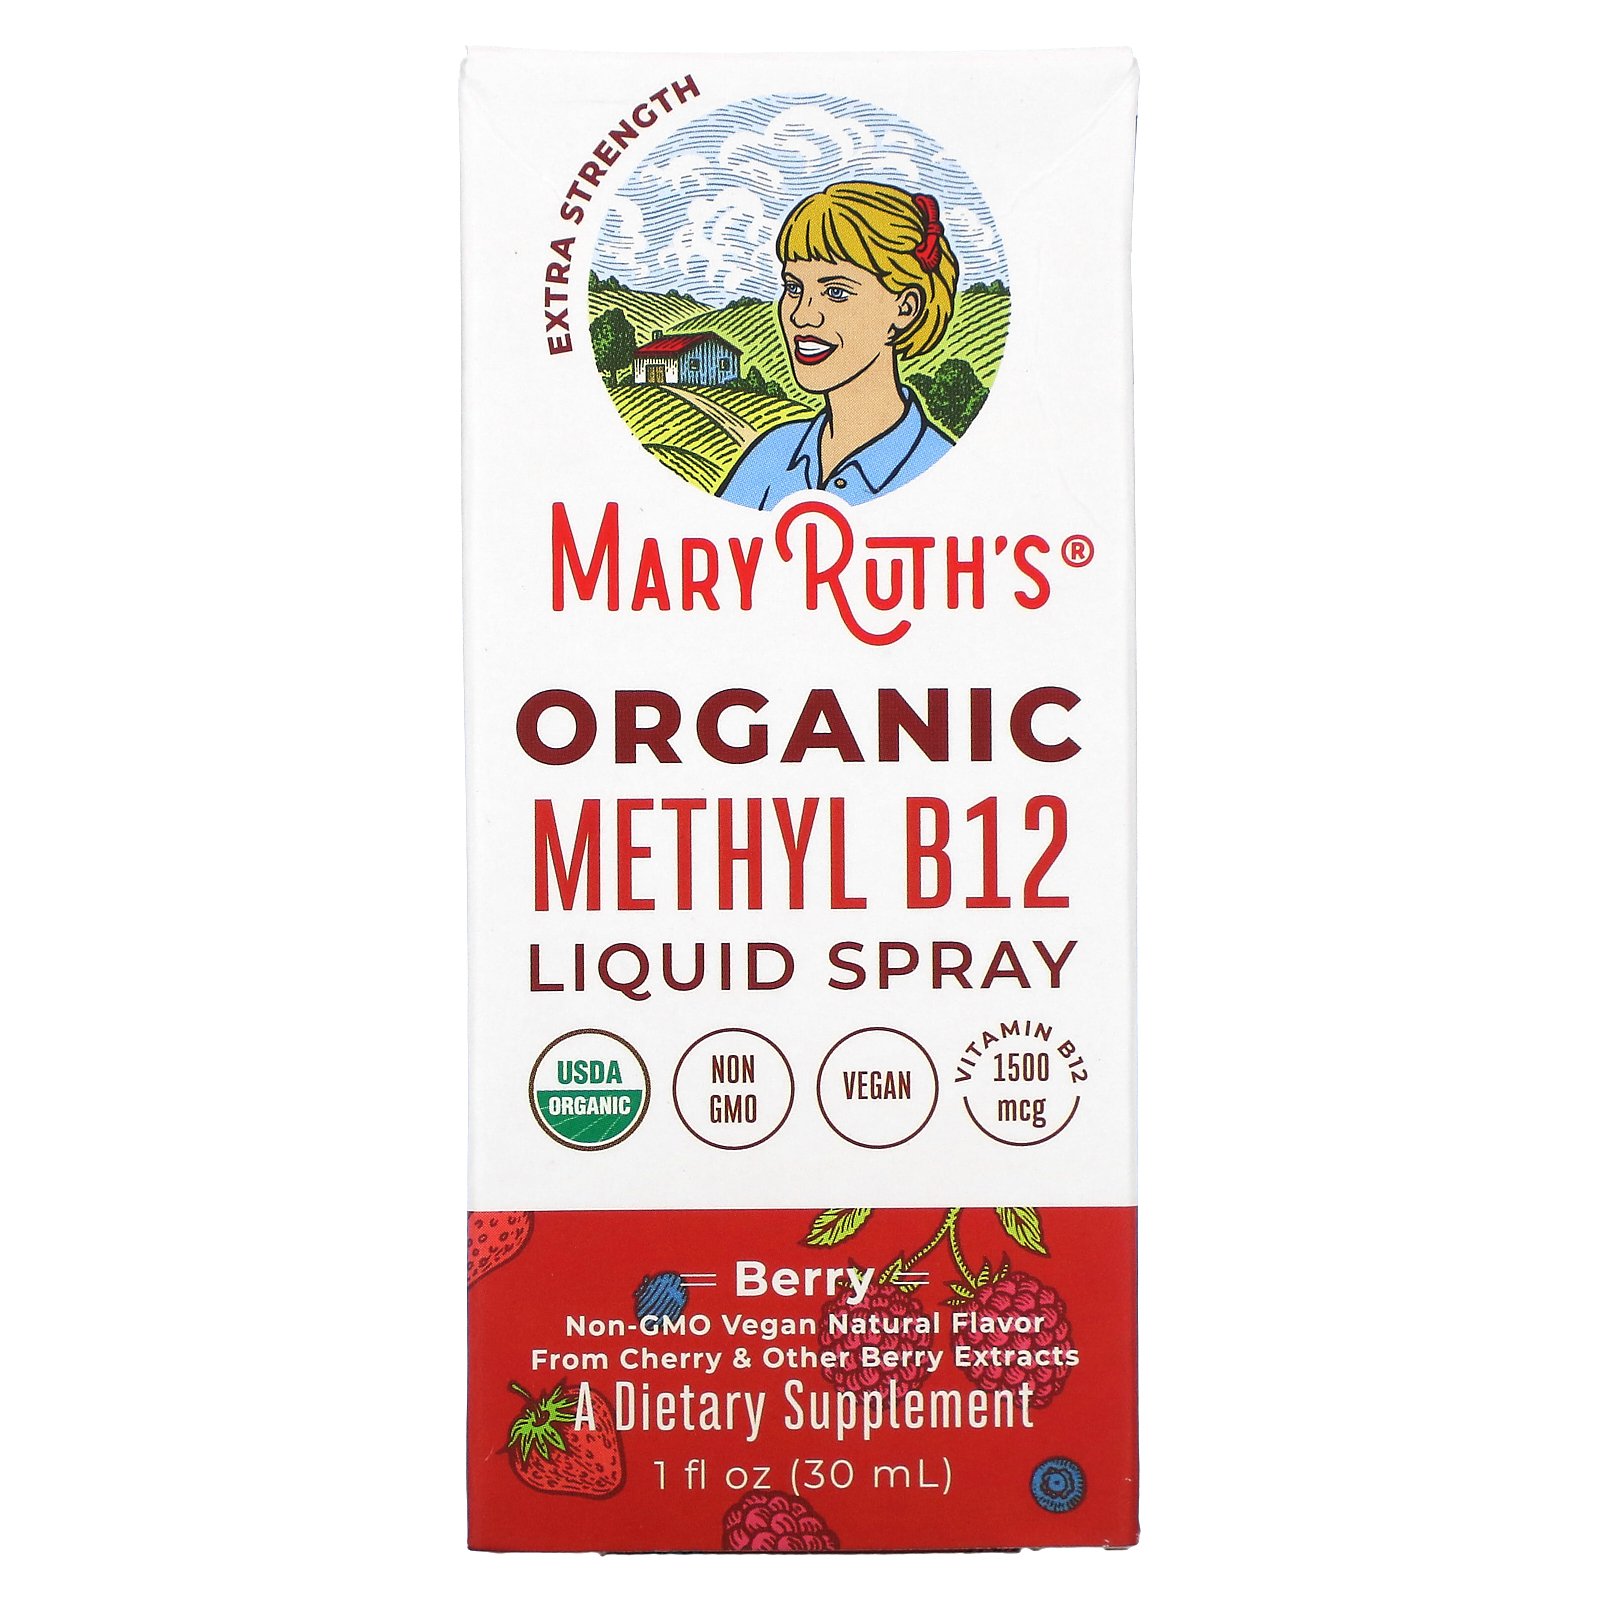 MaryRuth's メチルB12 オーガニック スプレー 【 iHerb アイハーブ 公式 】 マリールース 有機 ビタミンB12 ビタミンB ビタミン B12 B メチルコバラミン サプリメント サプリ リキッド 液体 ベリー味 30ml